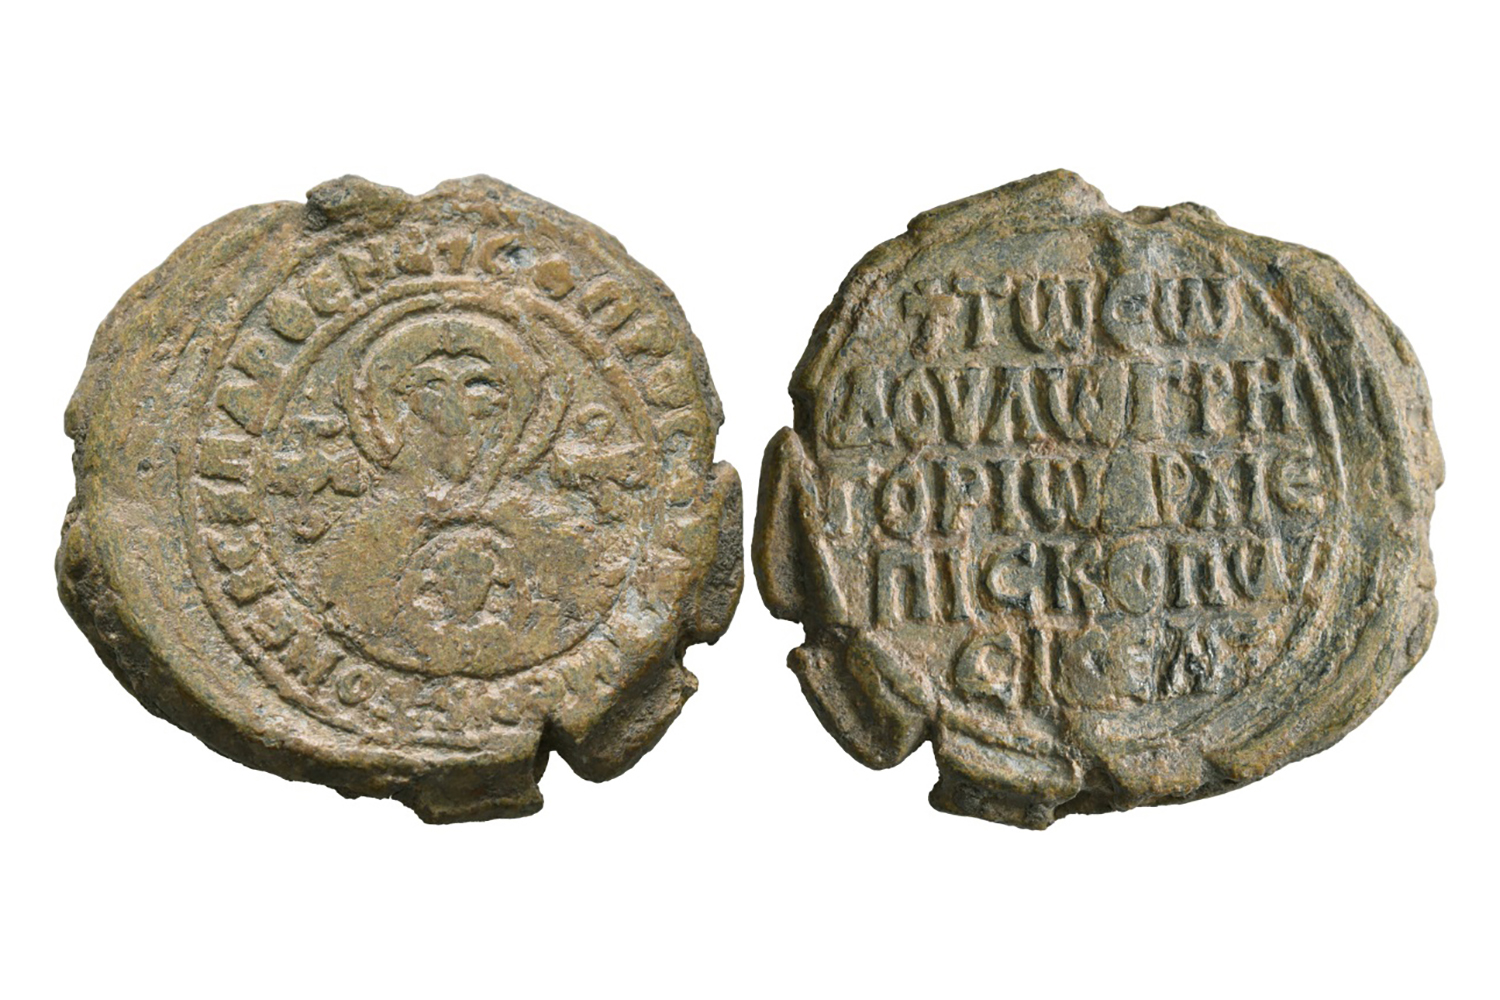 Seal of Gregory Asbestas